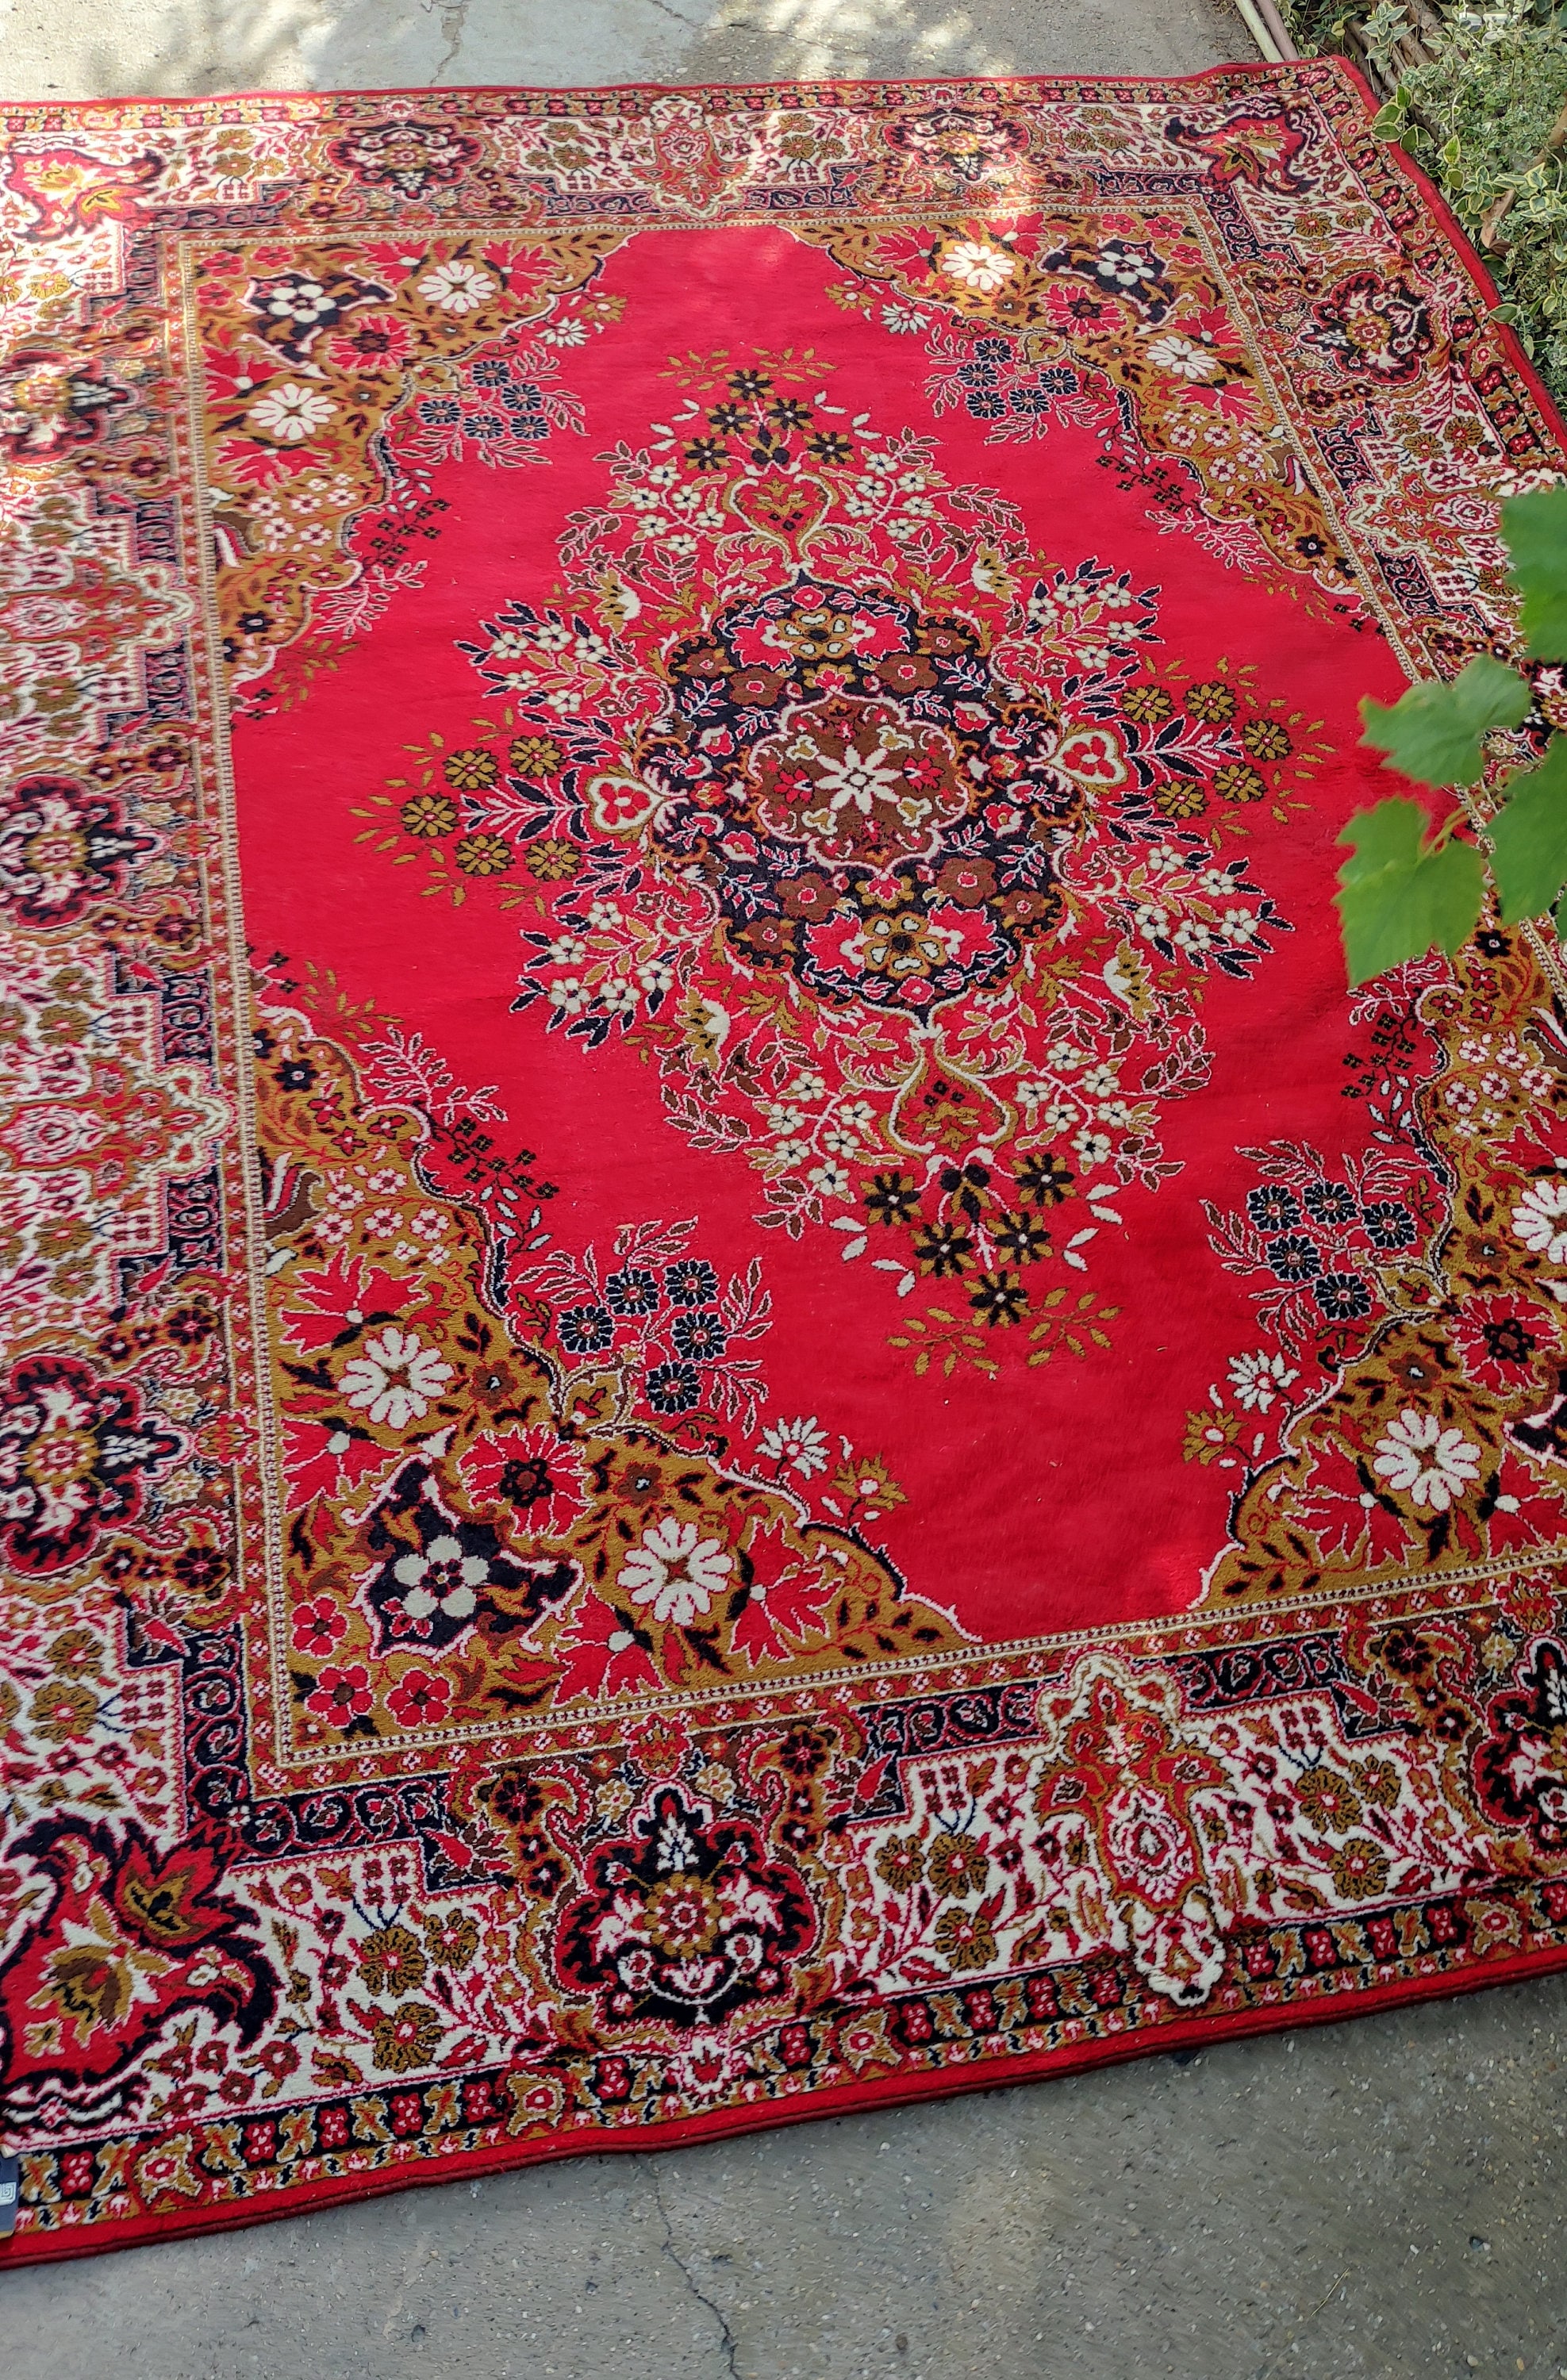 Yellow Flowers Area Rug Carpet, Floral Home Floor Decor 3x5 4x6 5x8 5.5x9  Designer Kids Nursery Rectangular Small Large Decorative Mat